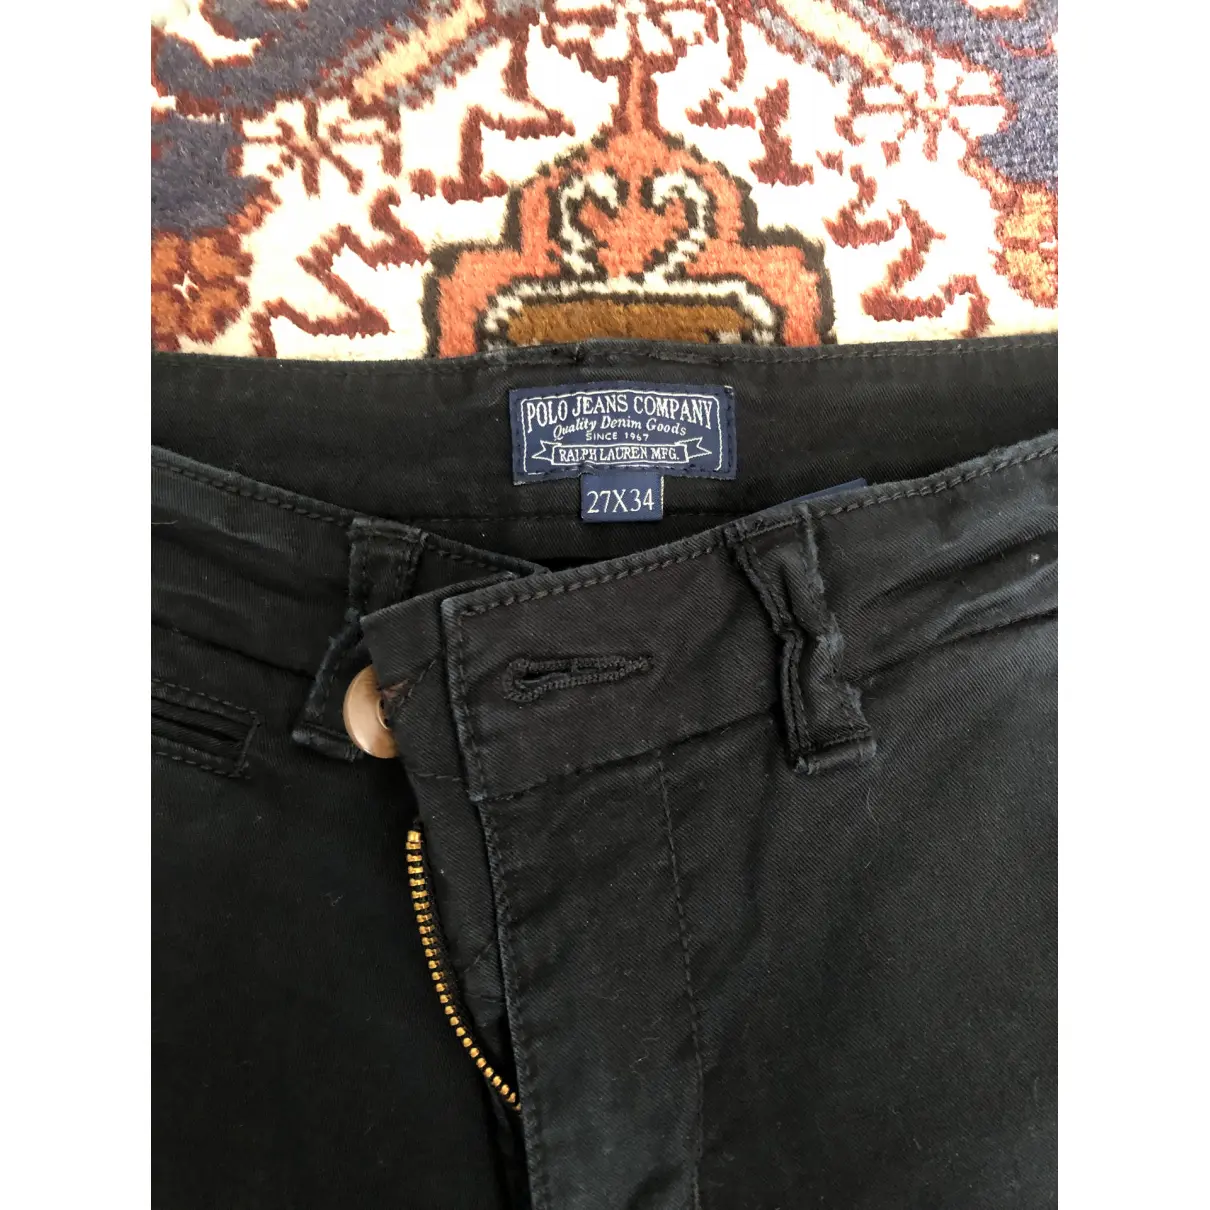 Buy Polo Ralph Lauren Straight jeans online